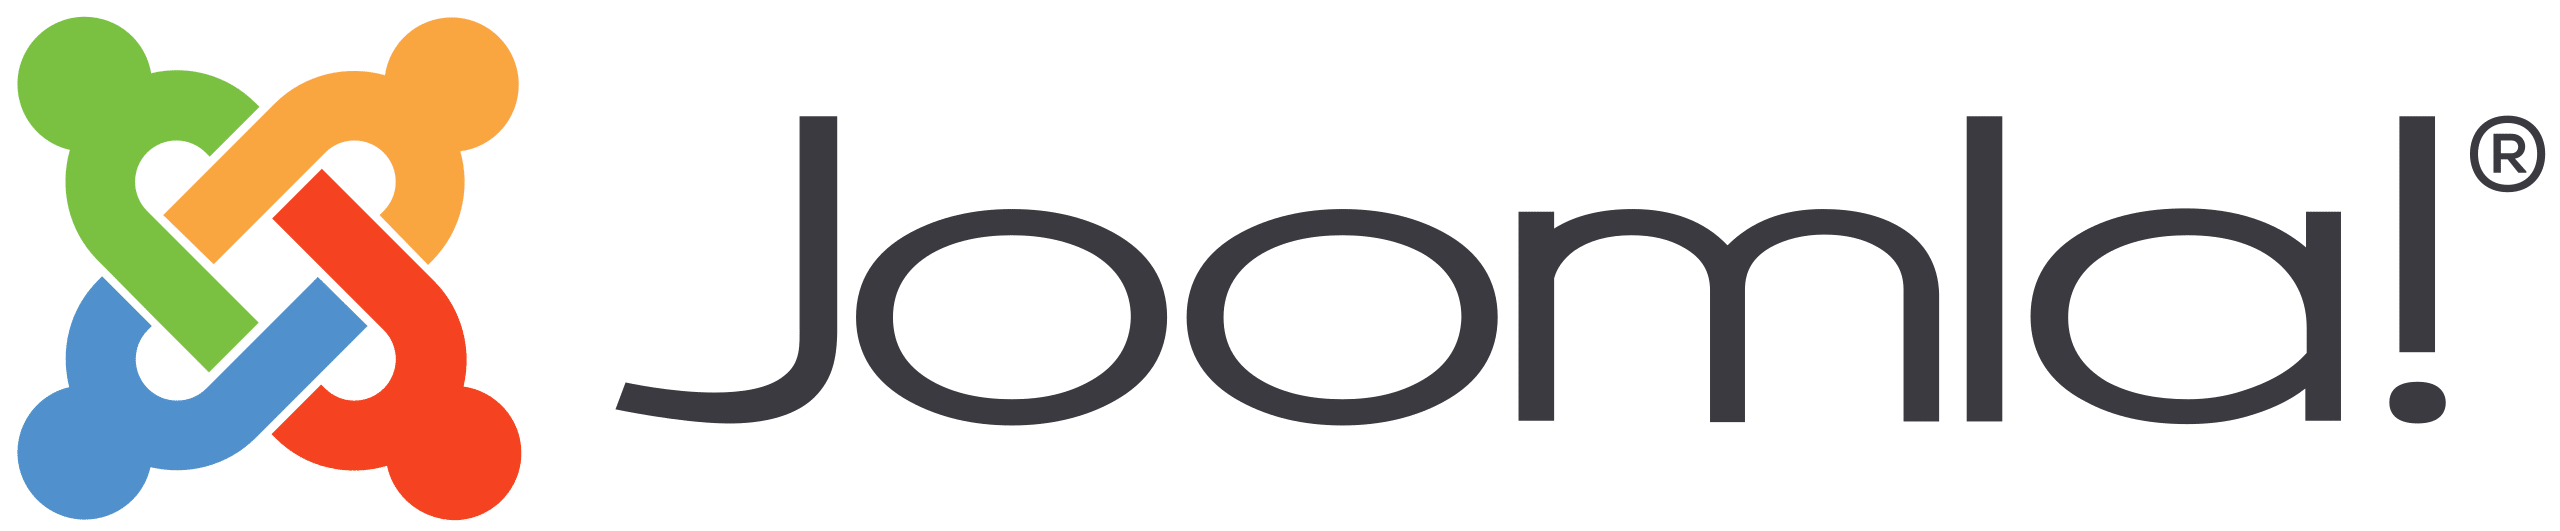 Joomla! logotipo